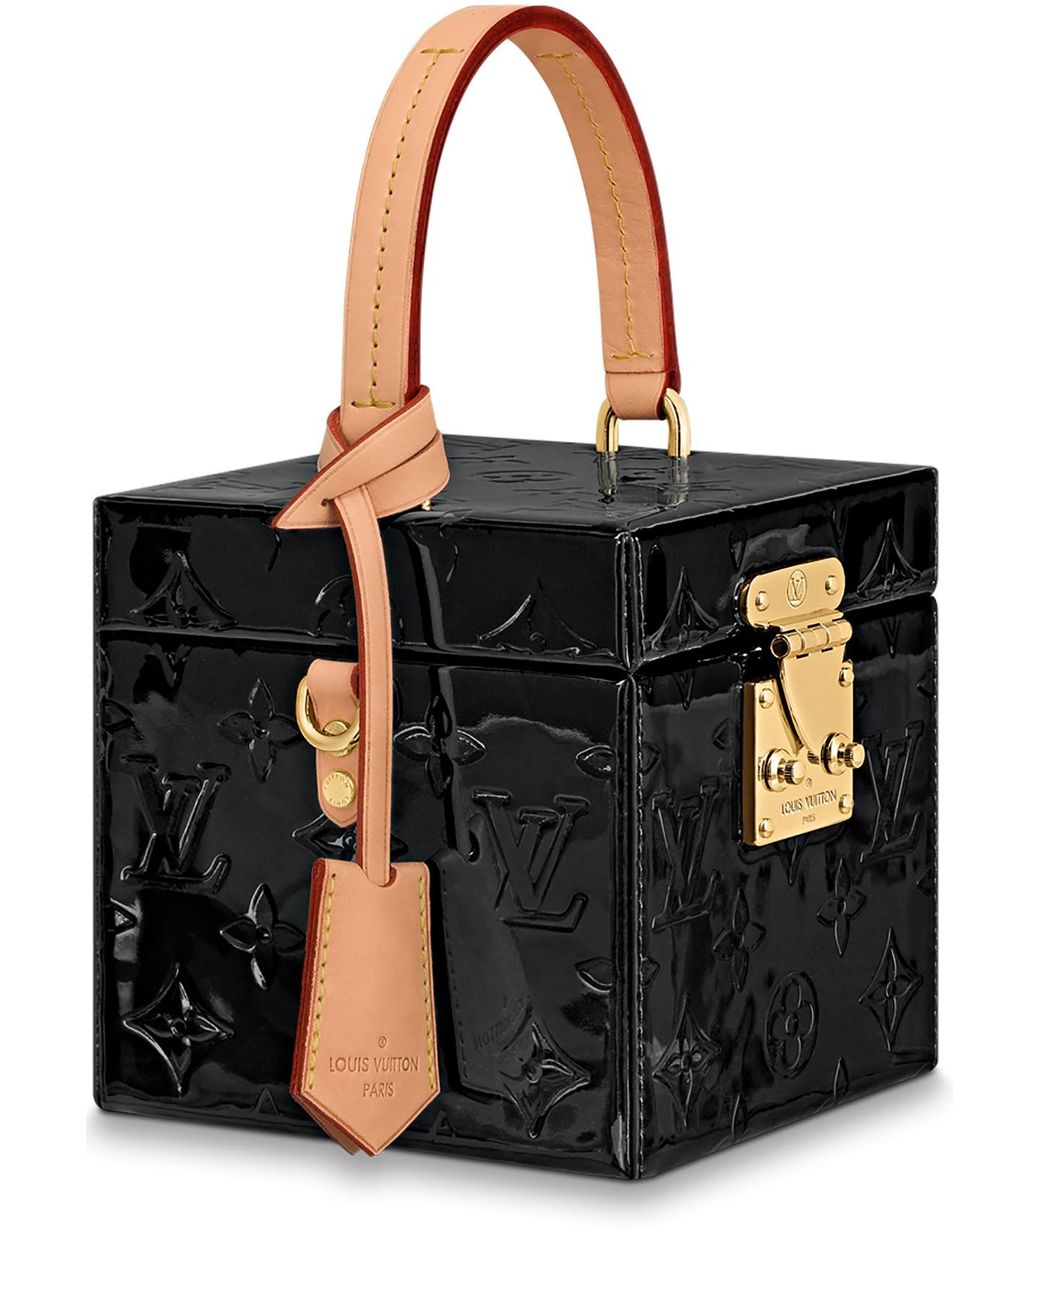 lv handbag box